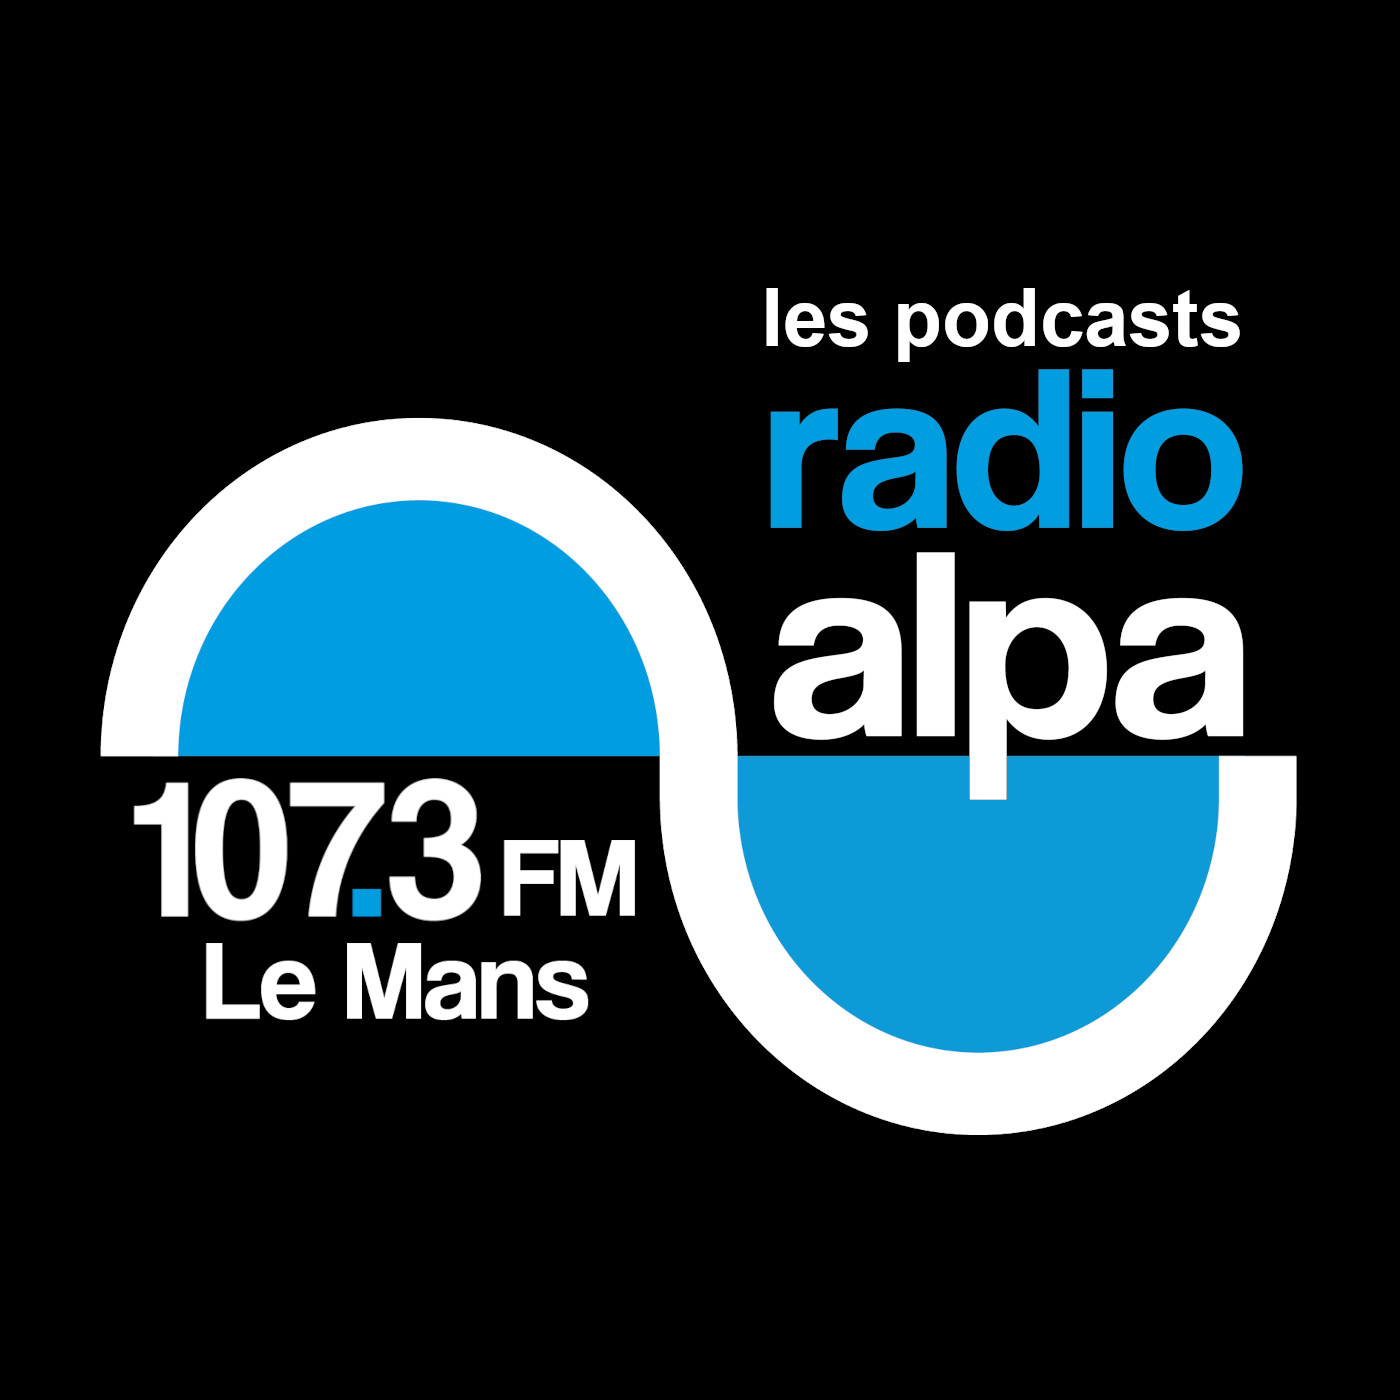 Radio Alpa